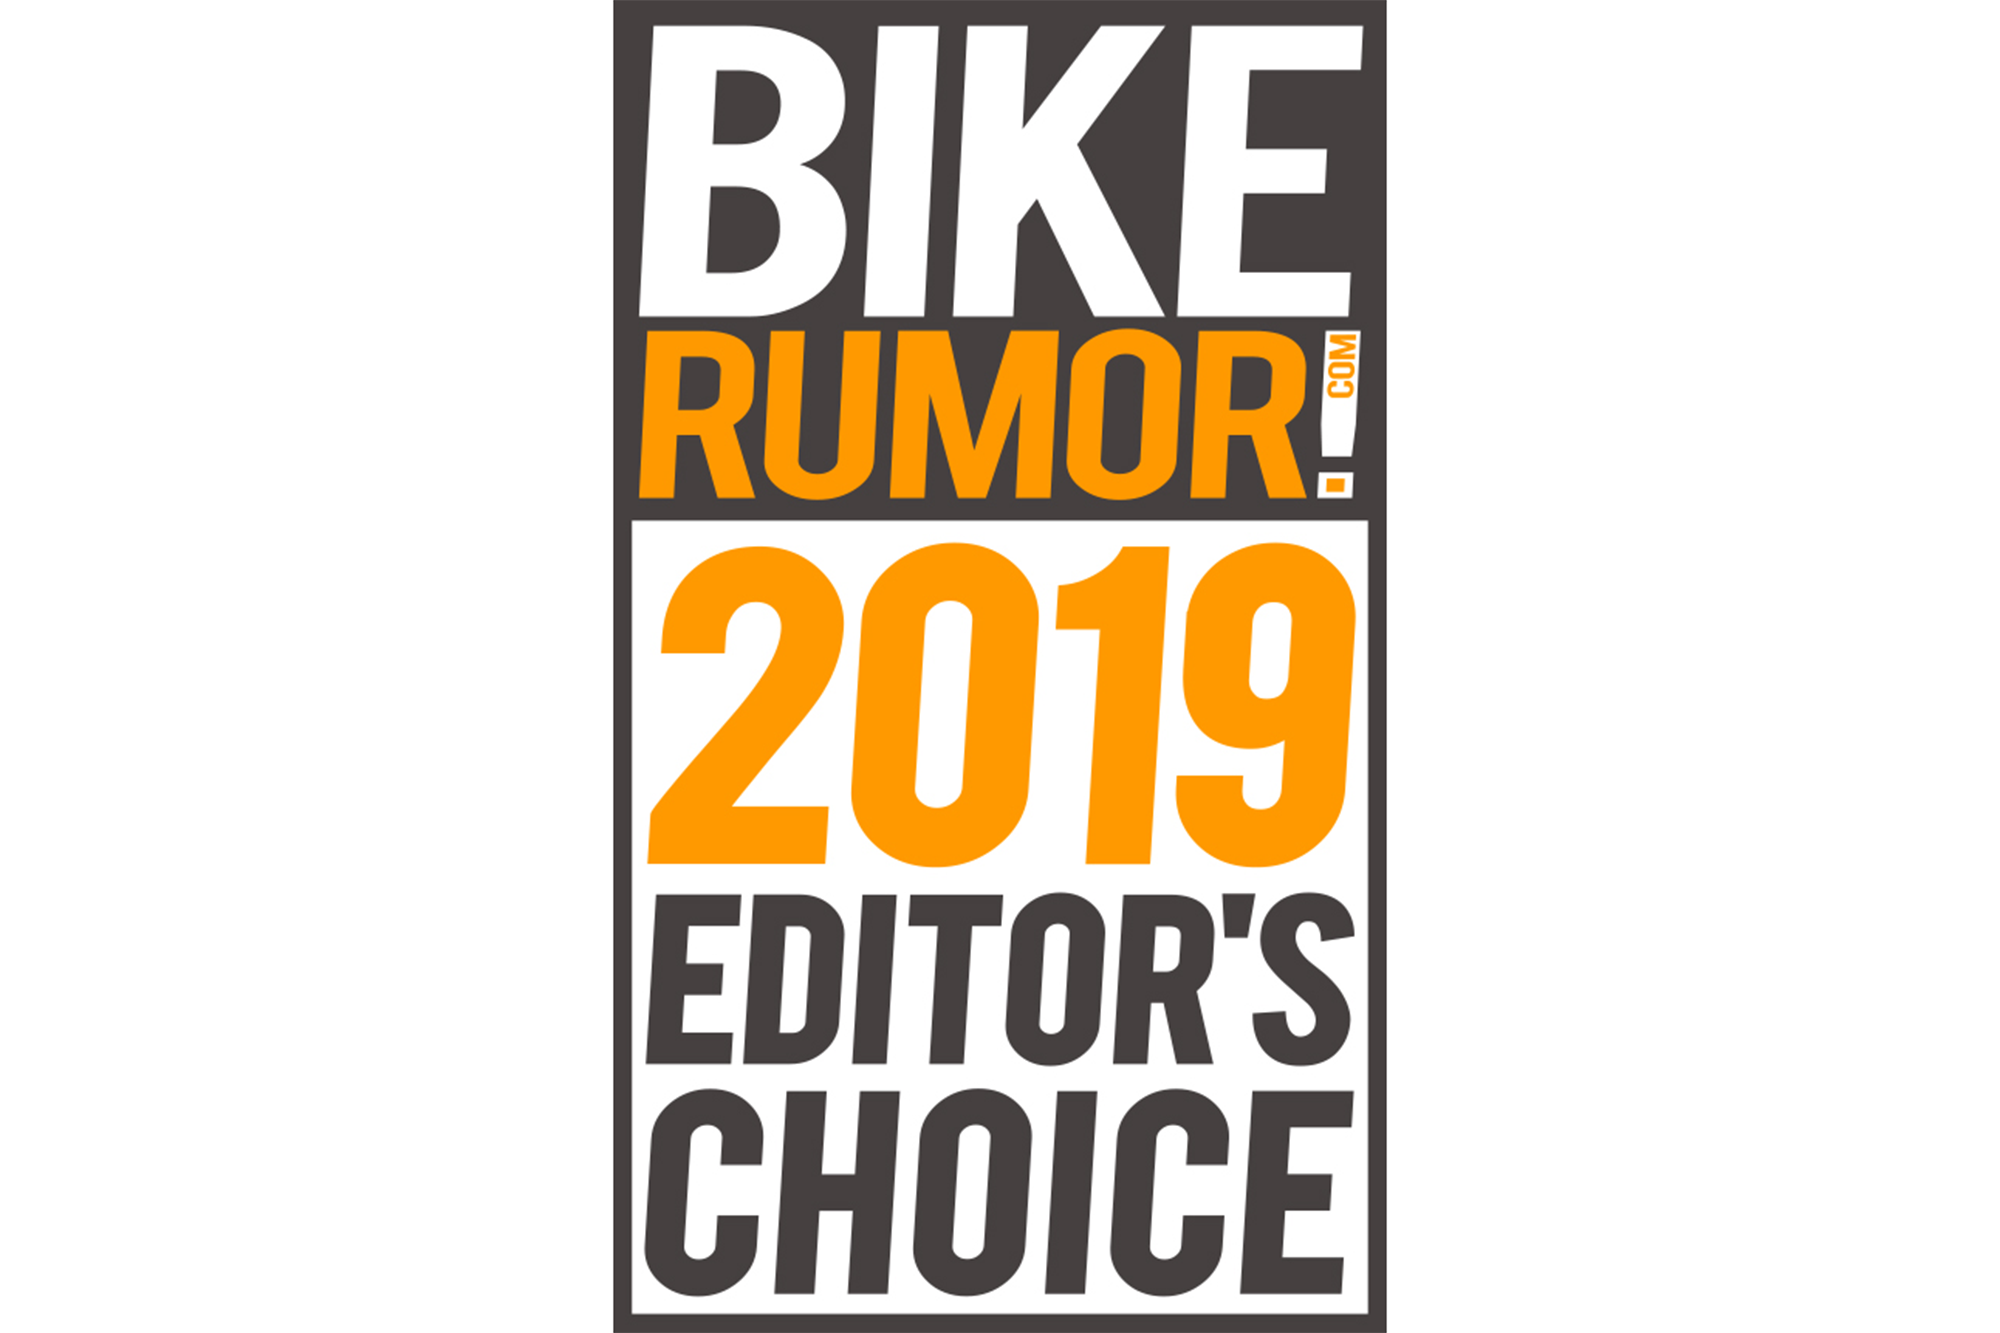 BikeRumour Editors Choice